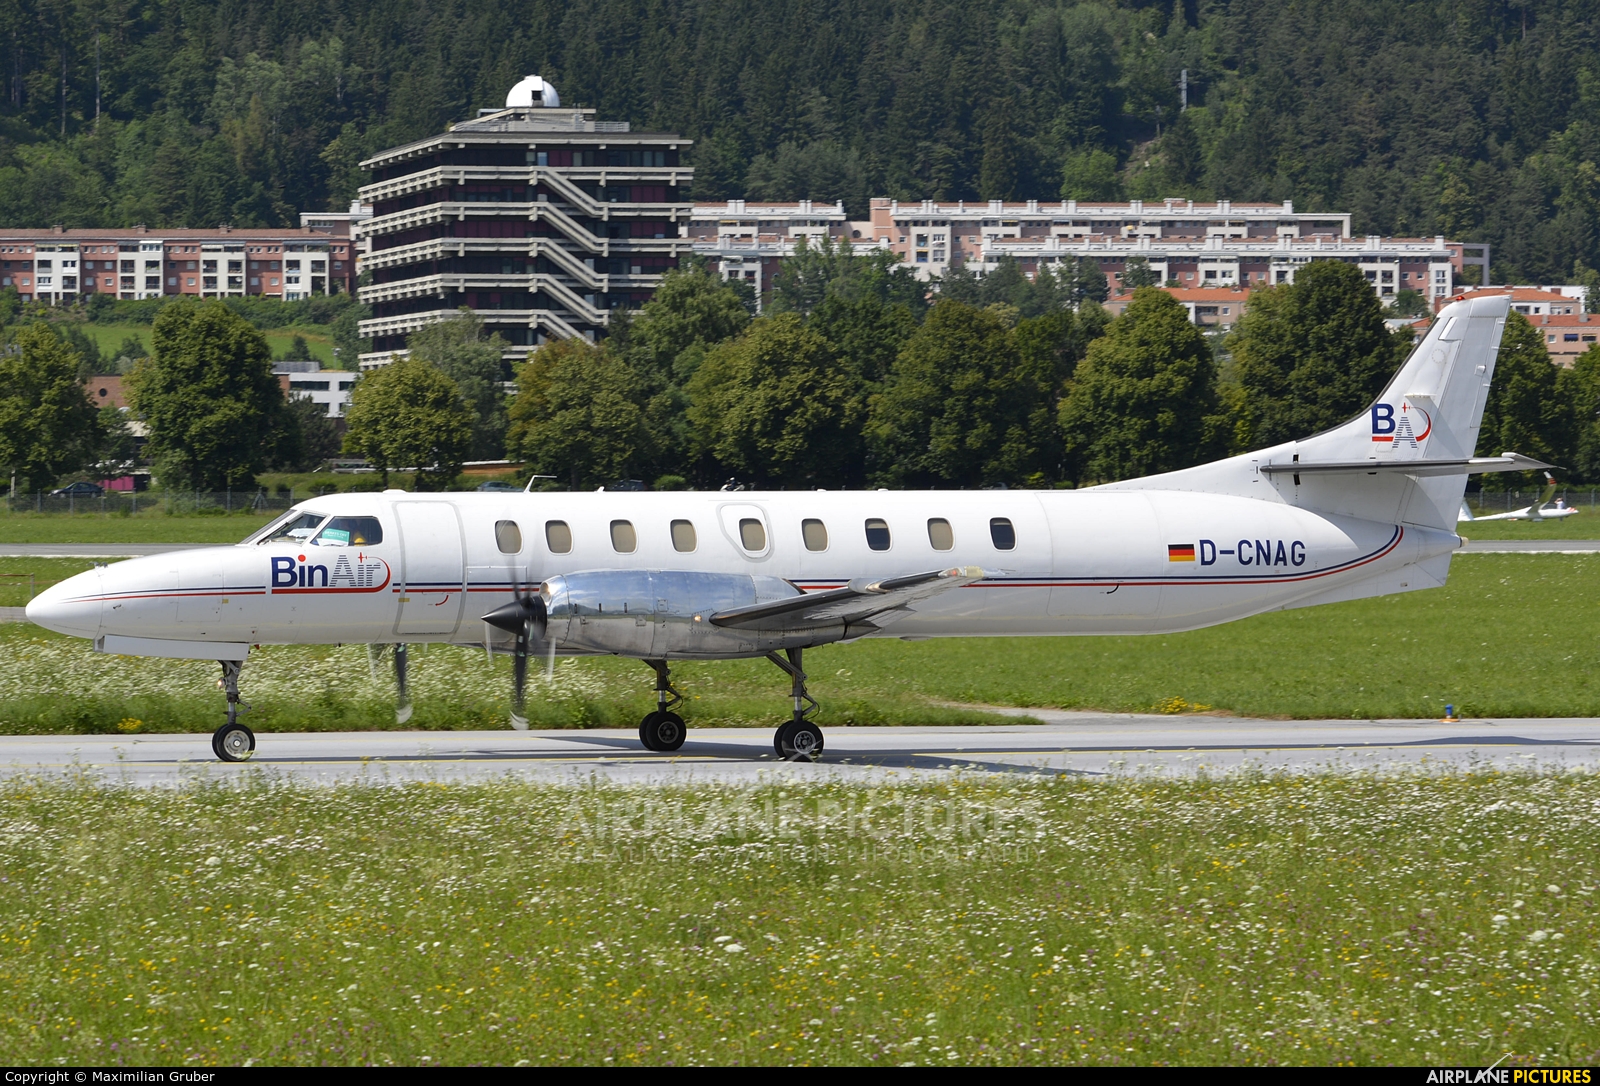 Bin Air D-CNAG aircraft at Innsbruck